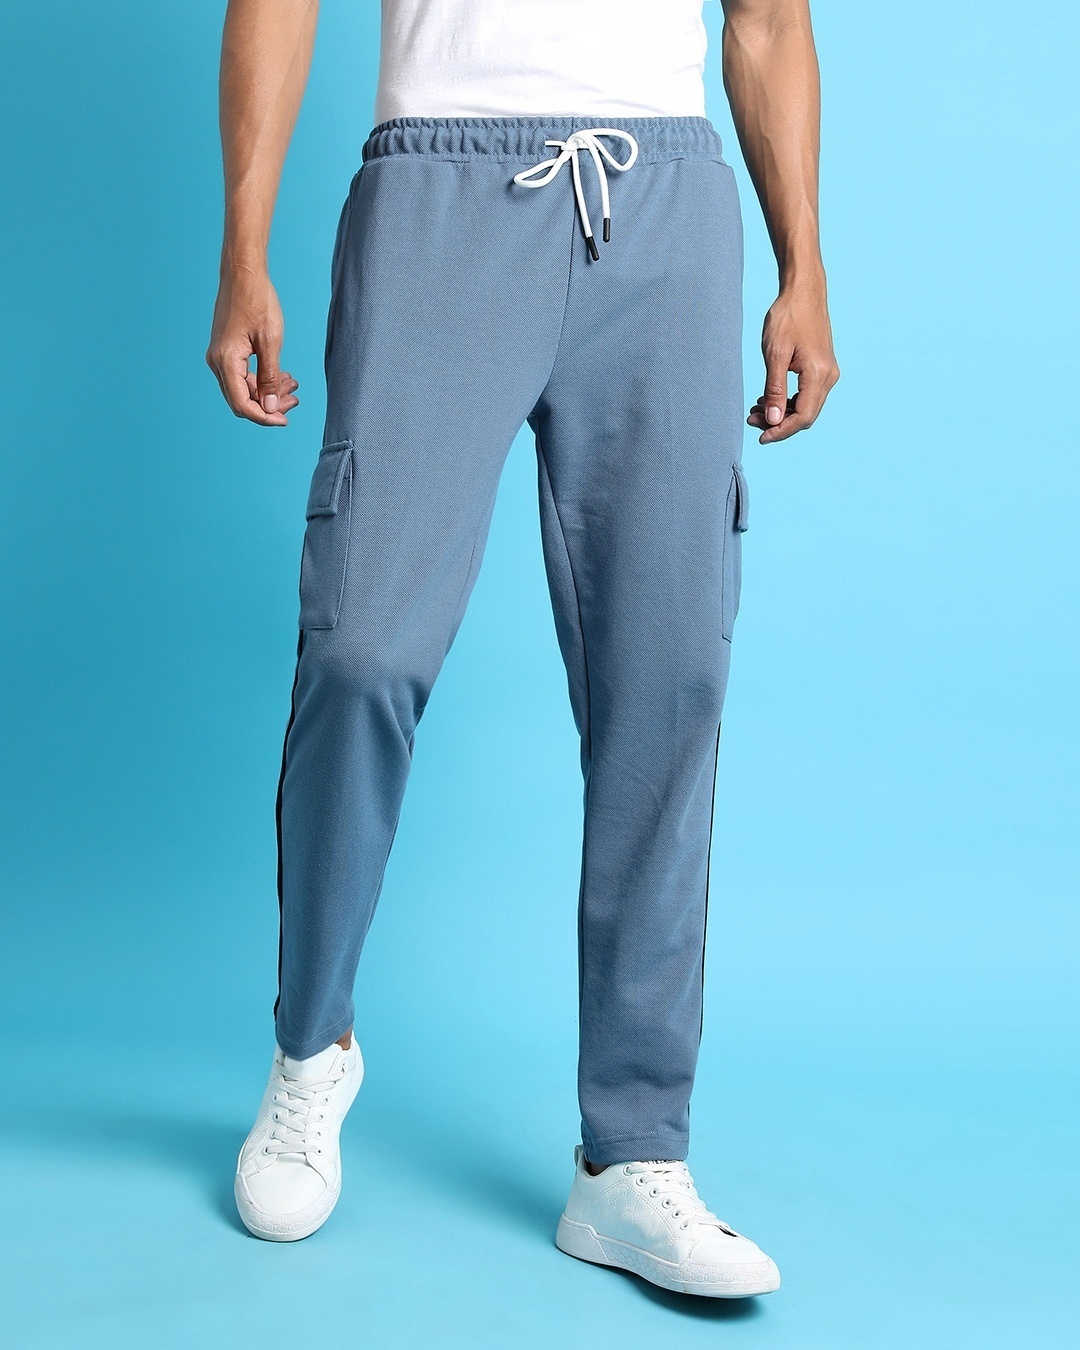 Slim Fit Cotton twill trousers - Beige - Men | H&M IN